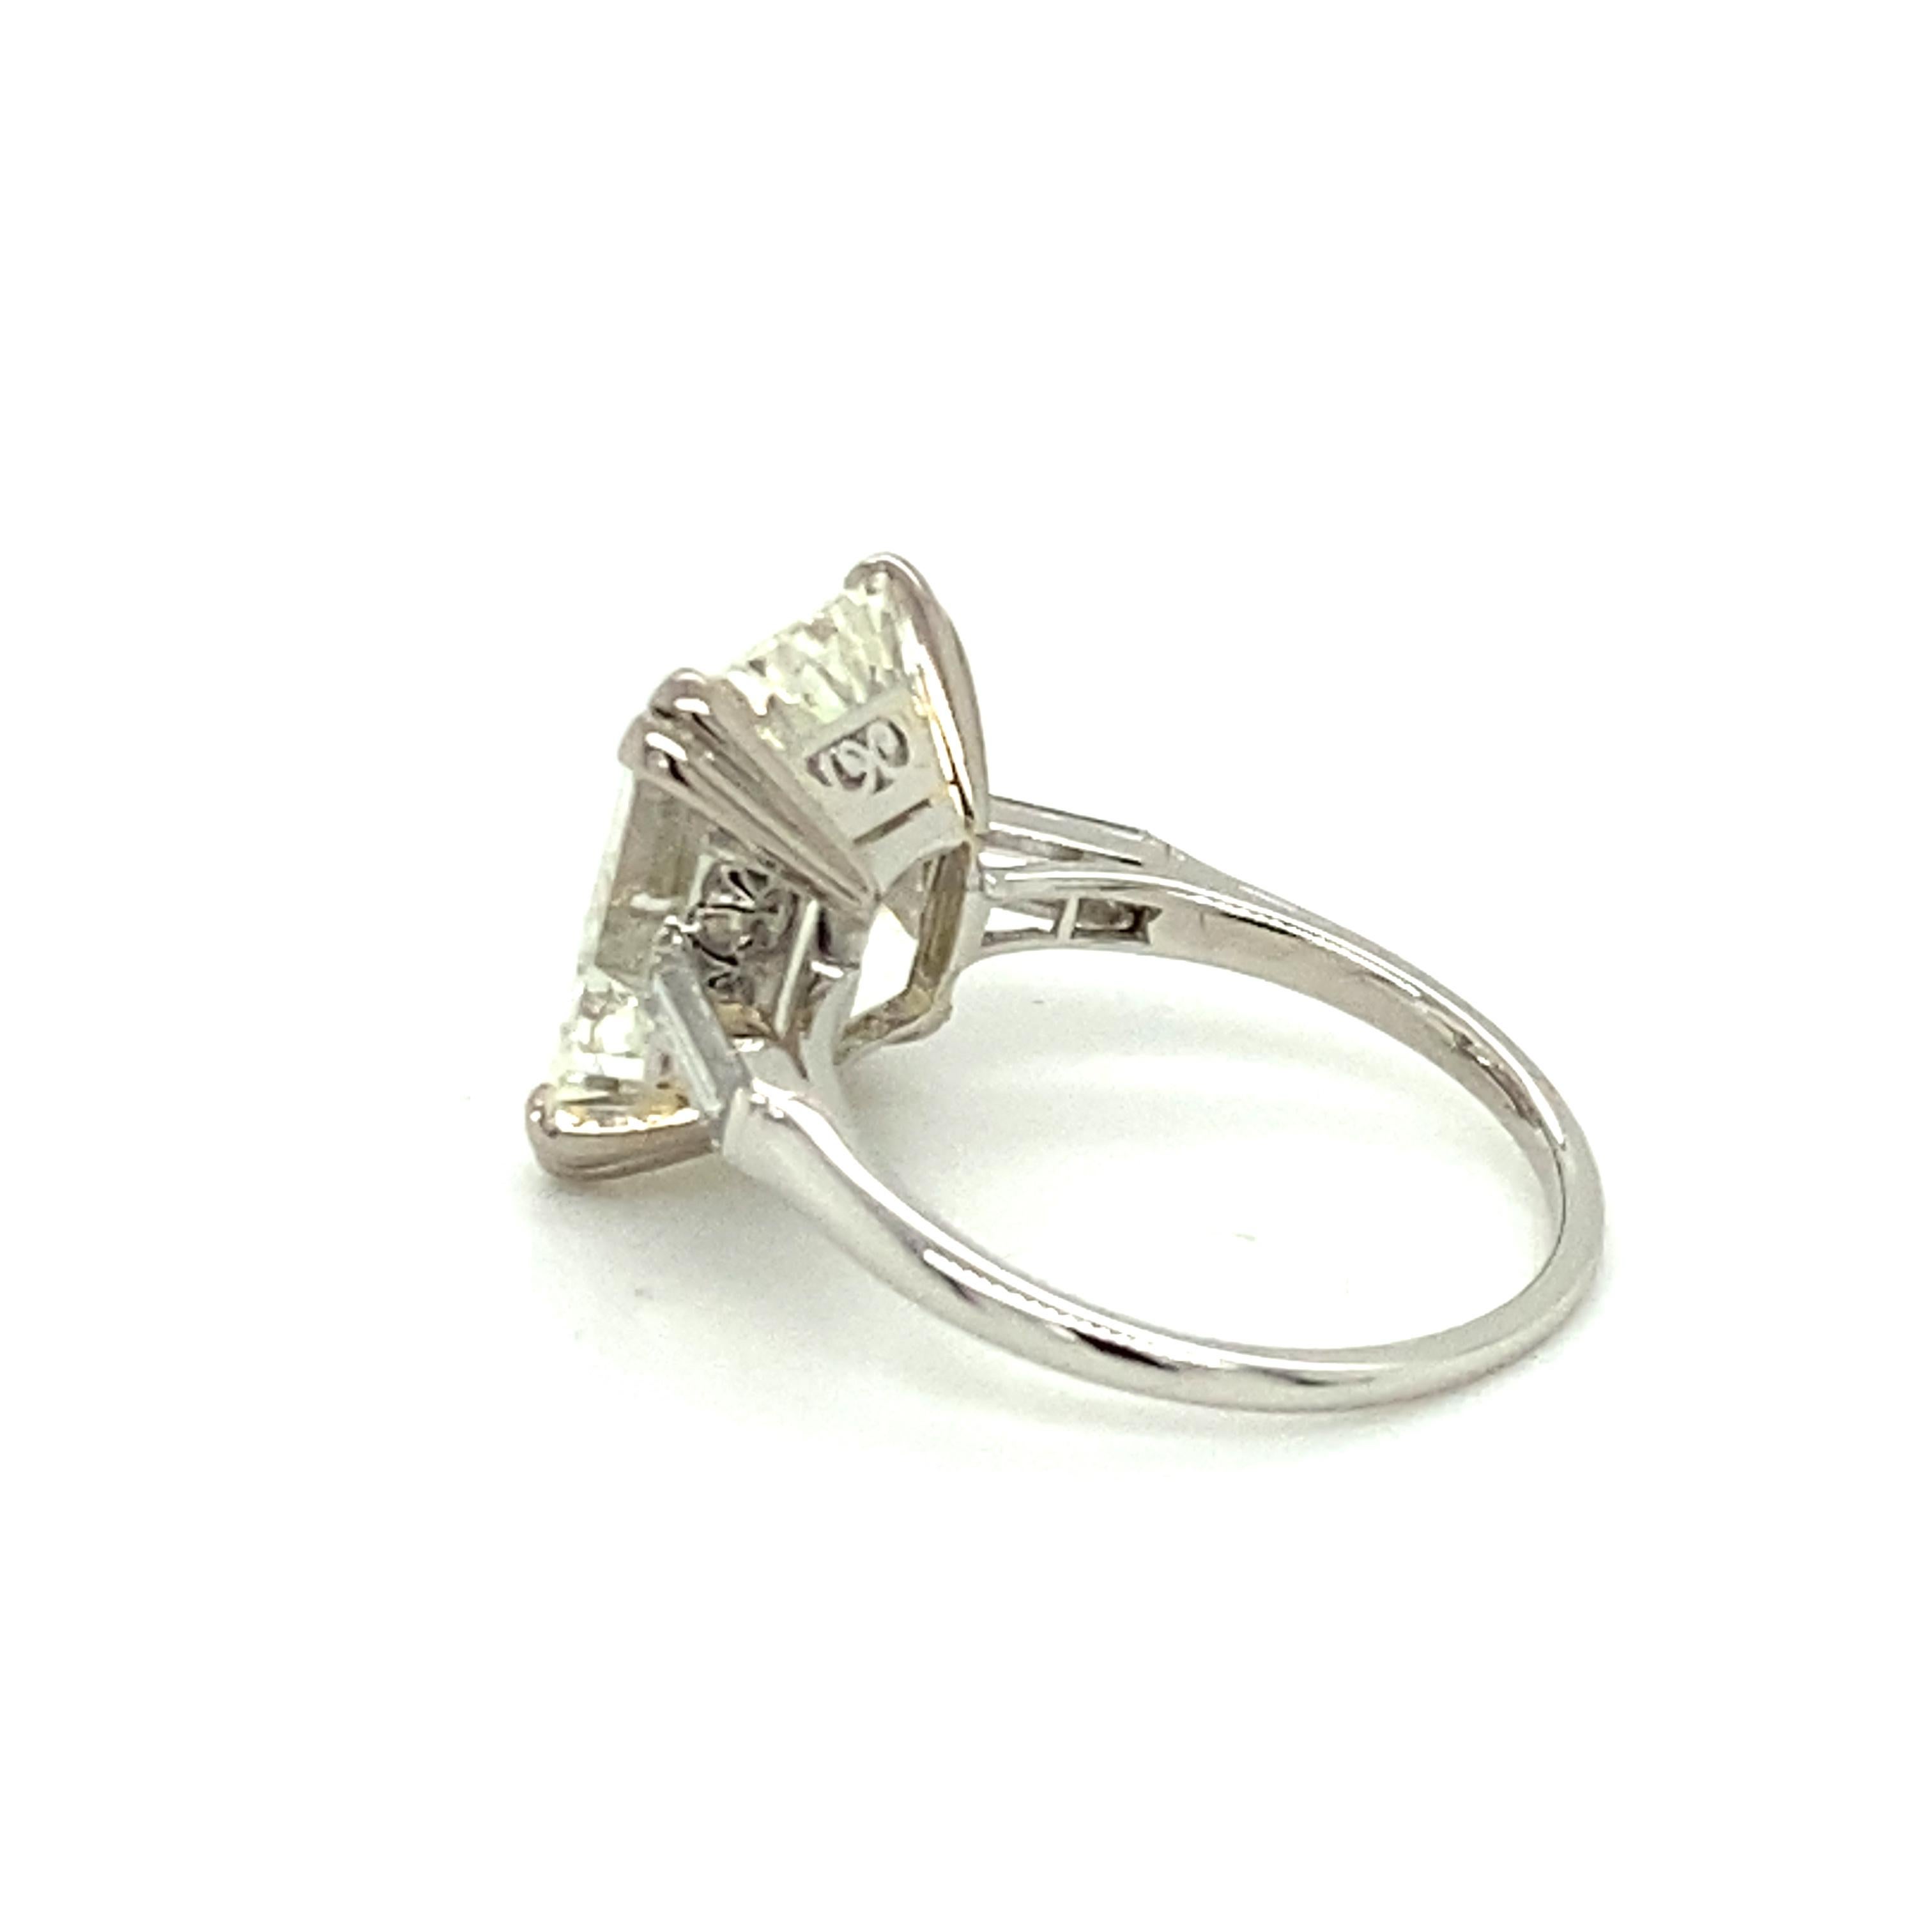 Stunning 7.34 Ct GIA Certified Emerald-Cut Diamond Ring in Platinum 950 2